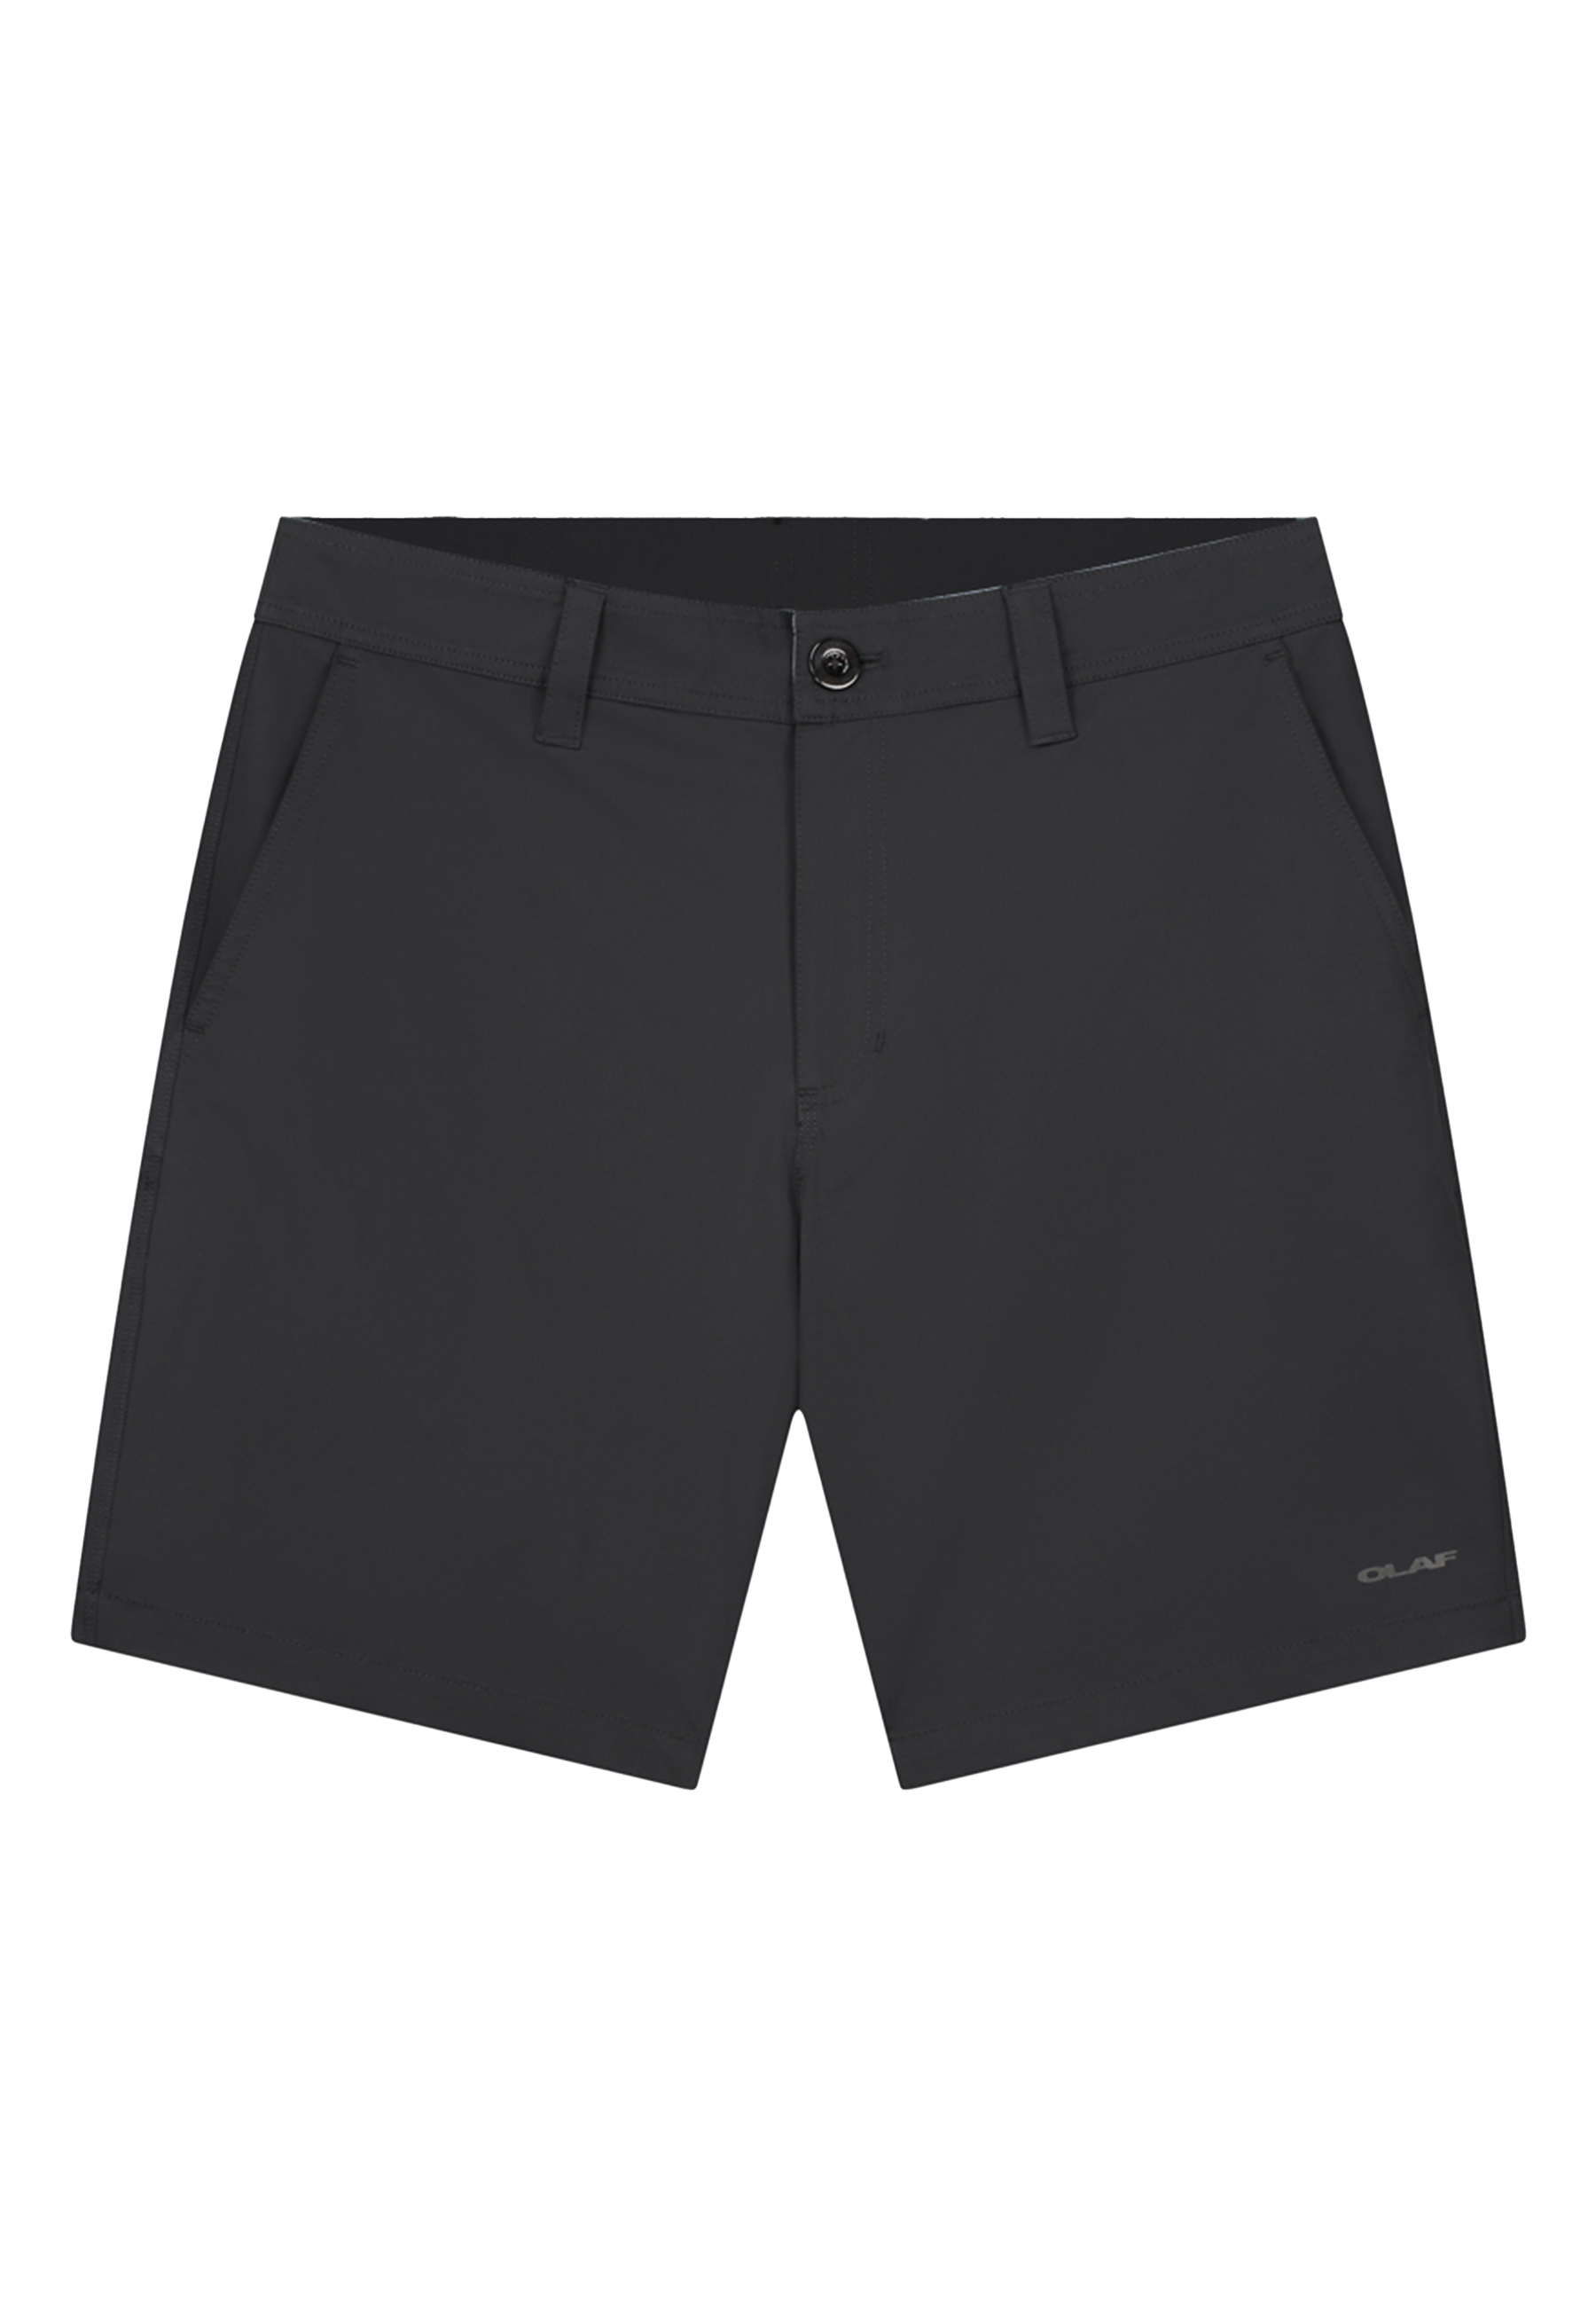 Broek Zwart Nylon shorts zwart